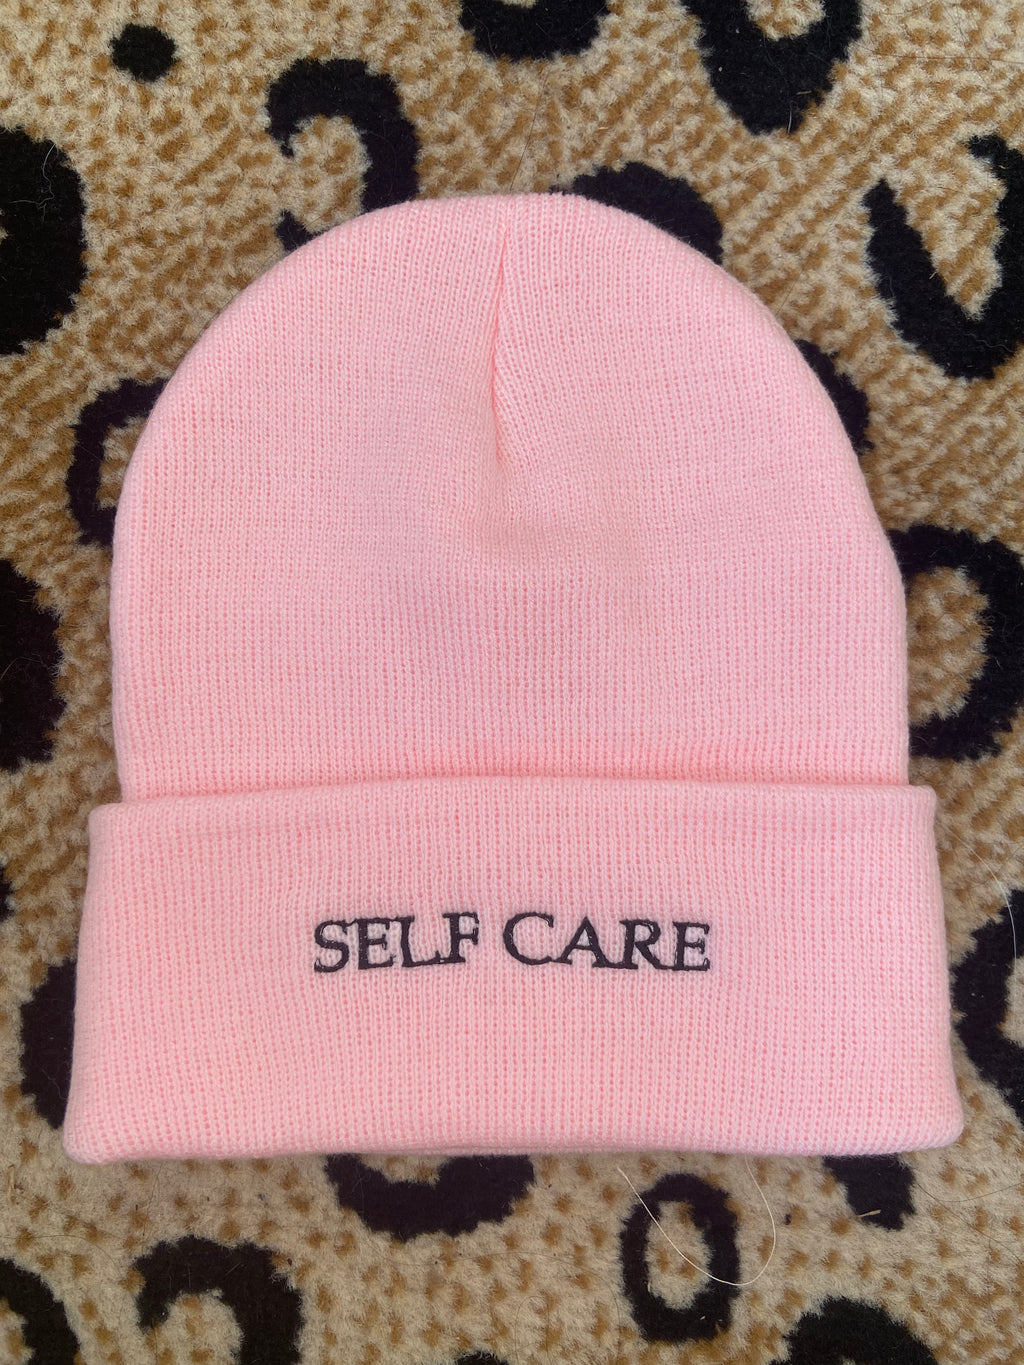 Self care light pink beanie